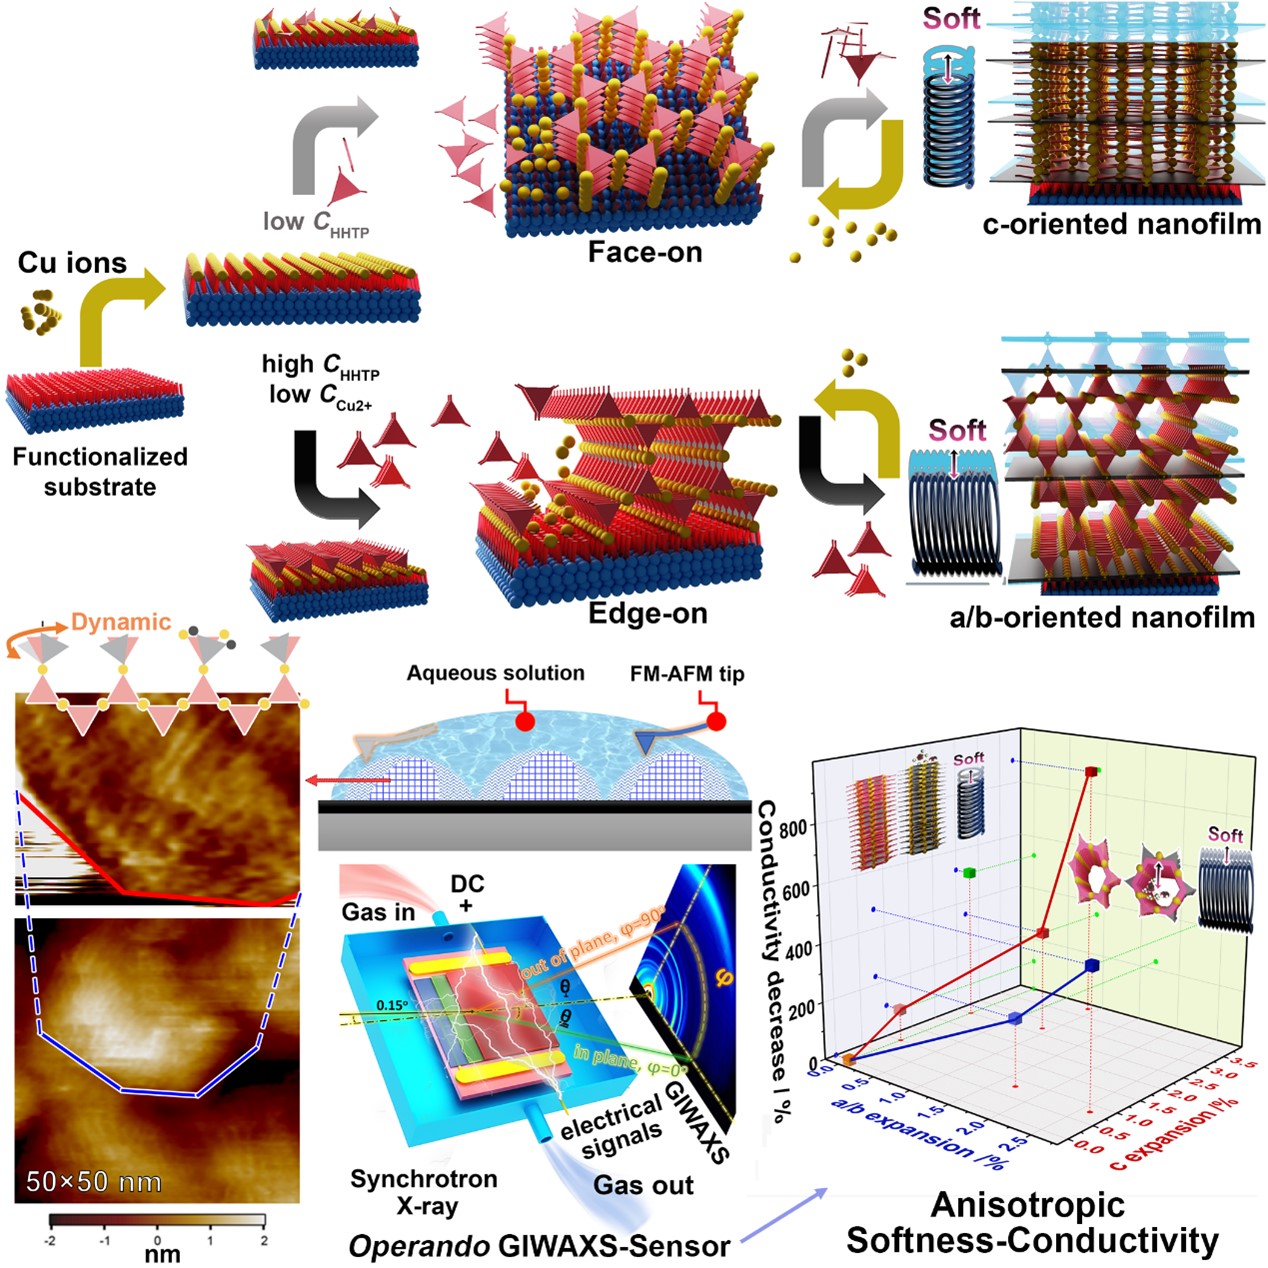 Researchers realize orientation control of conductive MOF nanofilms